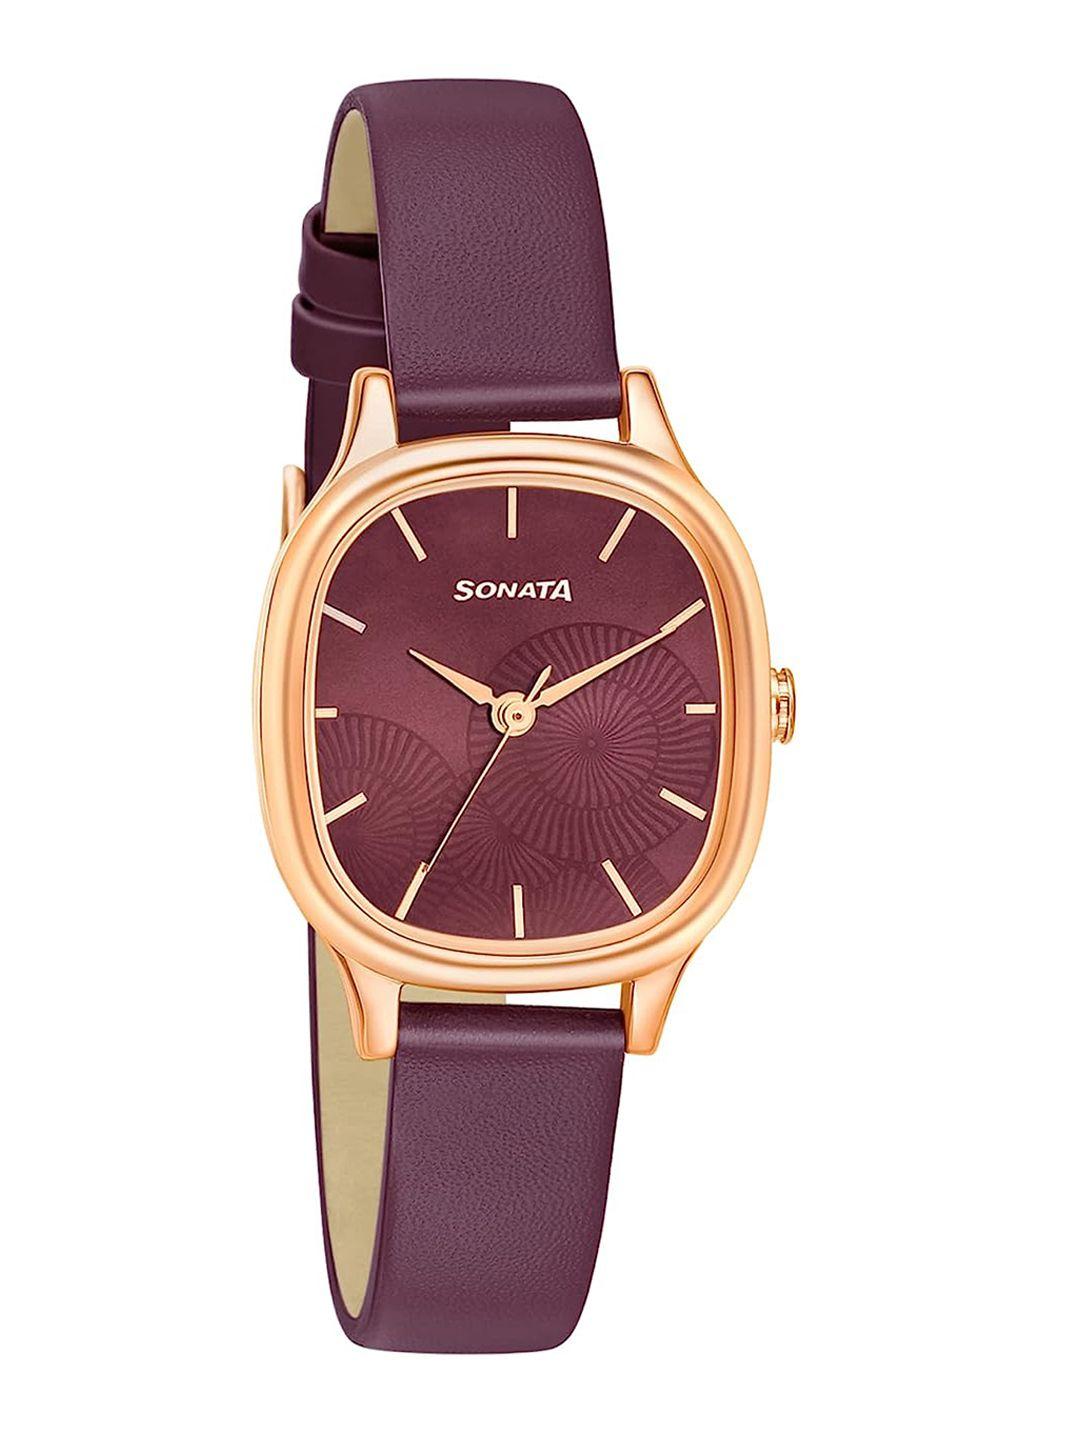 sonata women textured dial & leather straps analogue watch- 8173wl01